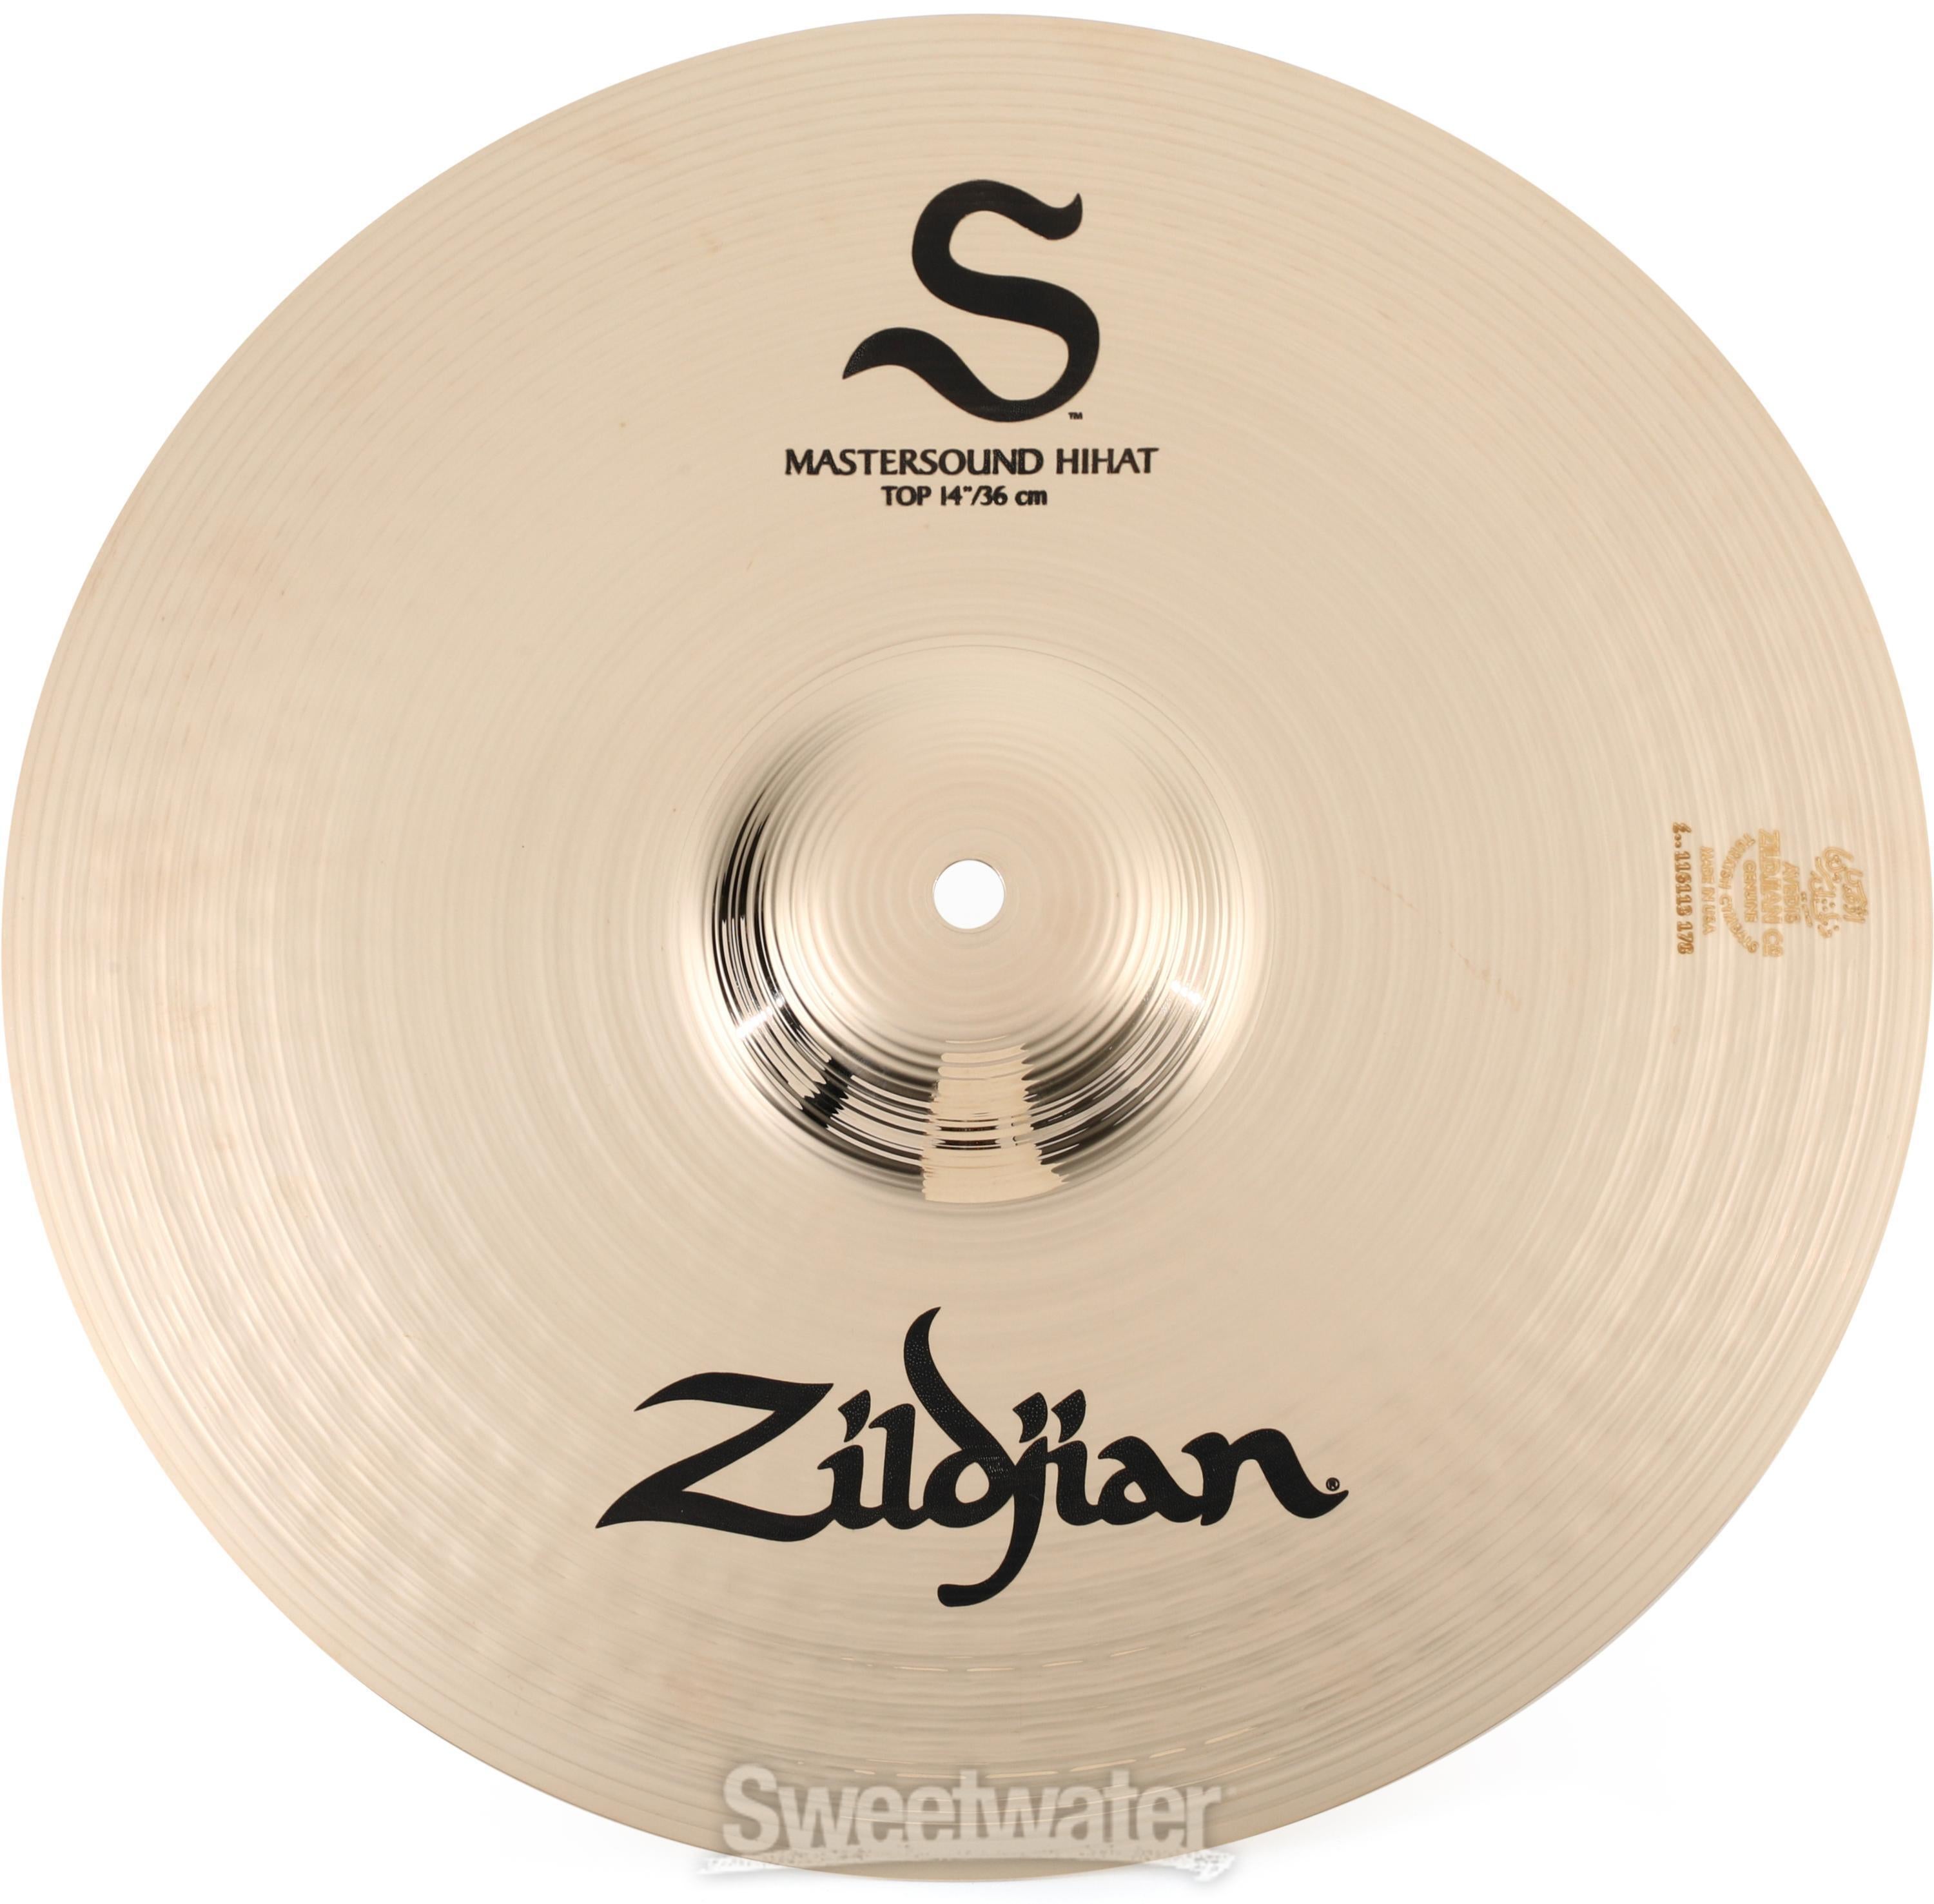 Zildjian 14 inch S Series Mastersound Hi-hat Cymbals | Sweetwater